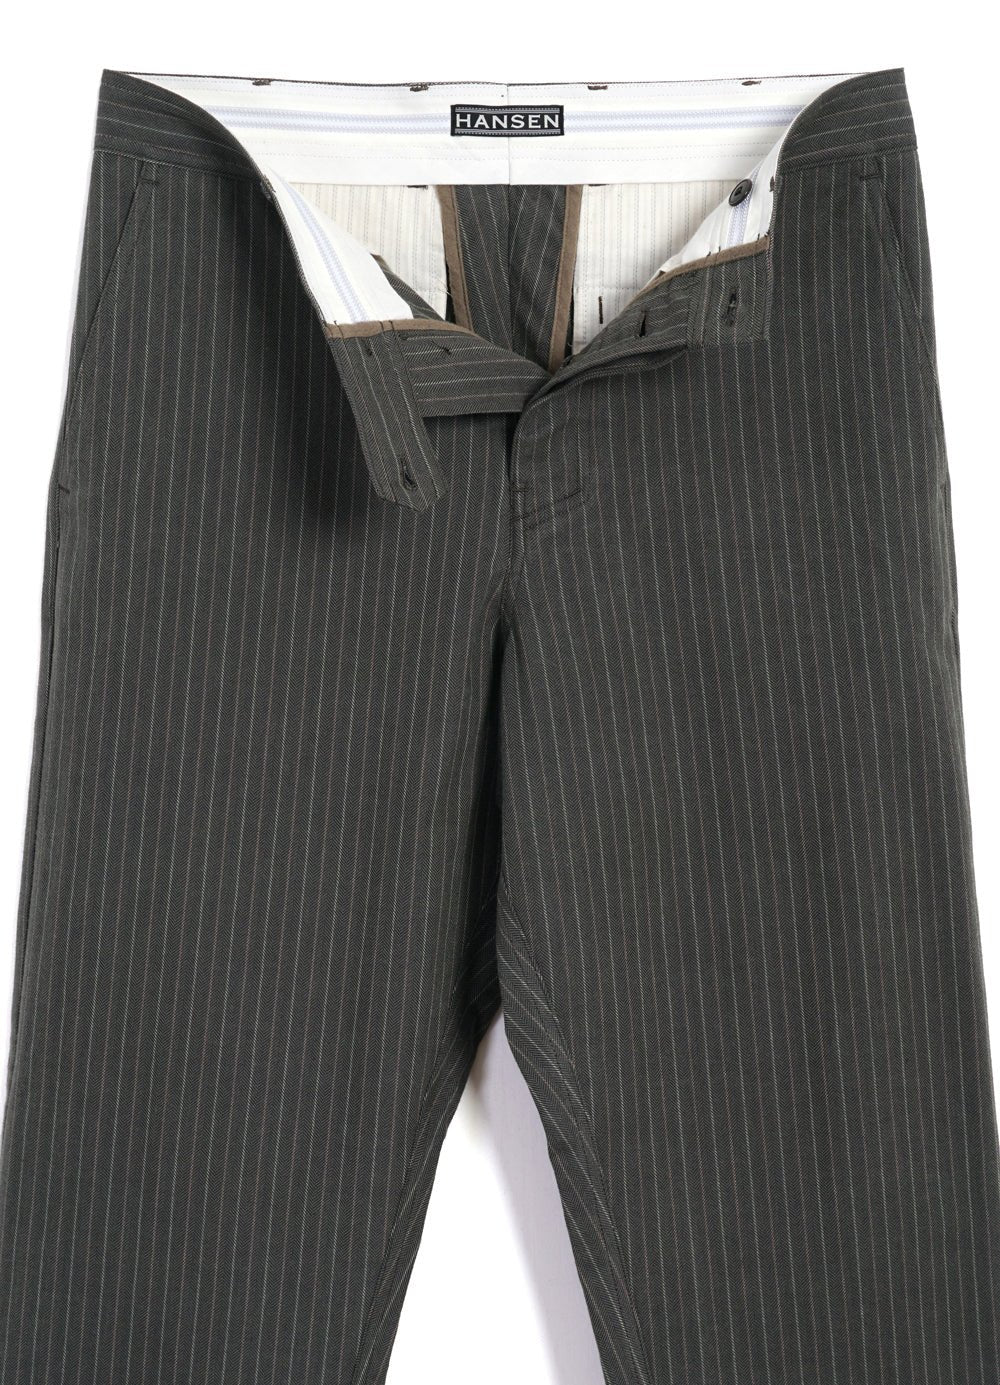 HANSEN GARMENTS - KIAN | Cinch Back Wide Trousers | Khaki Pin - HANSEN Garments